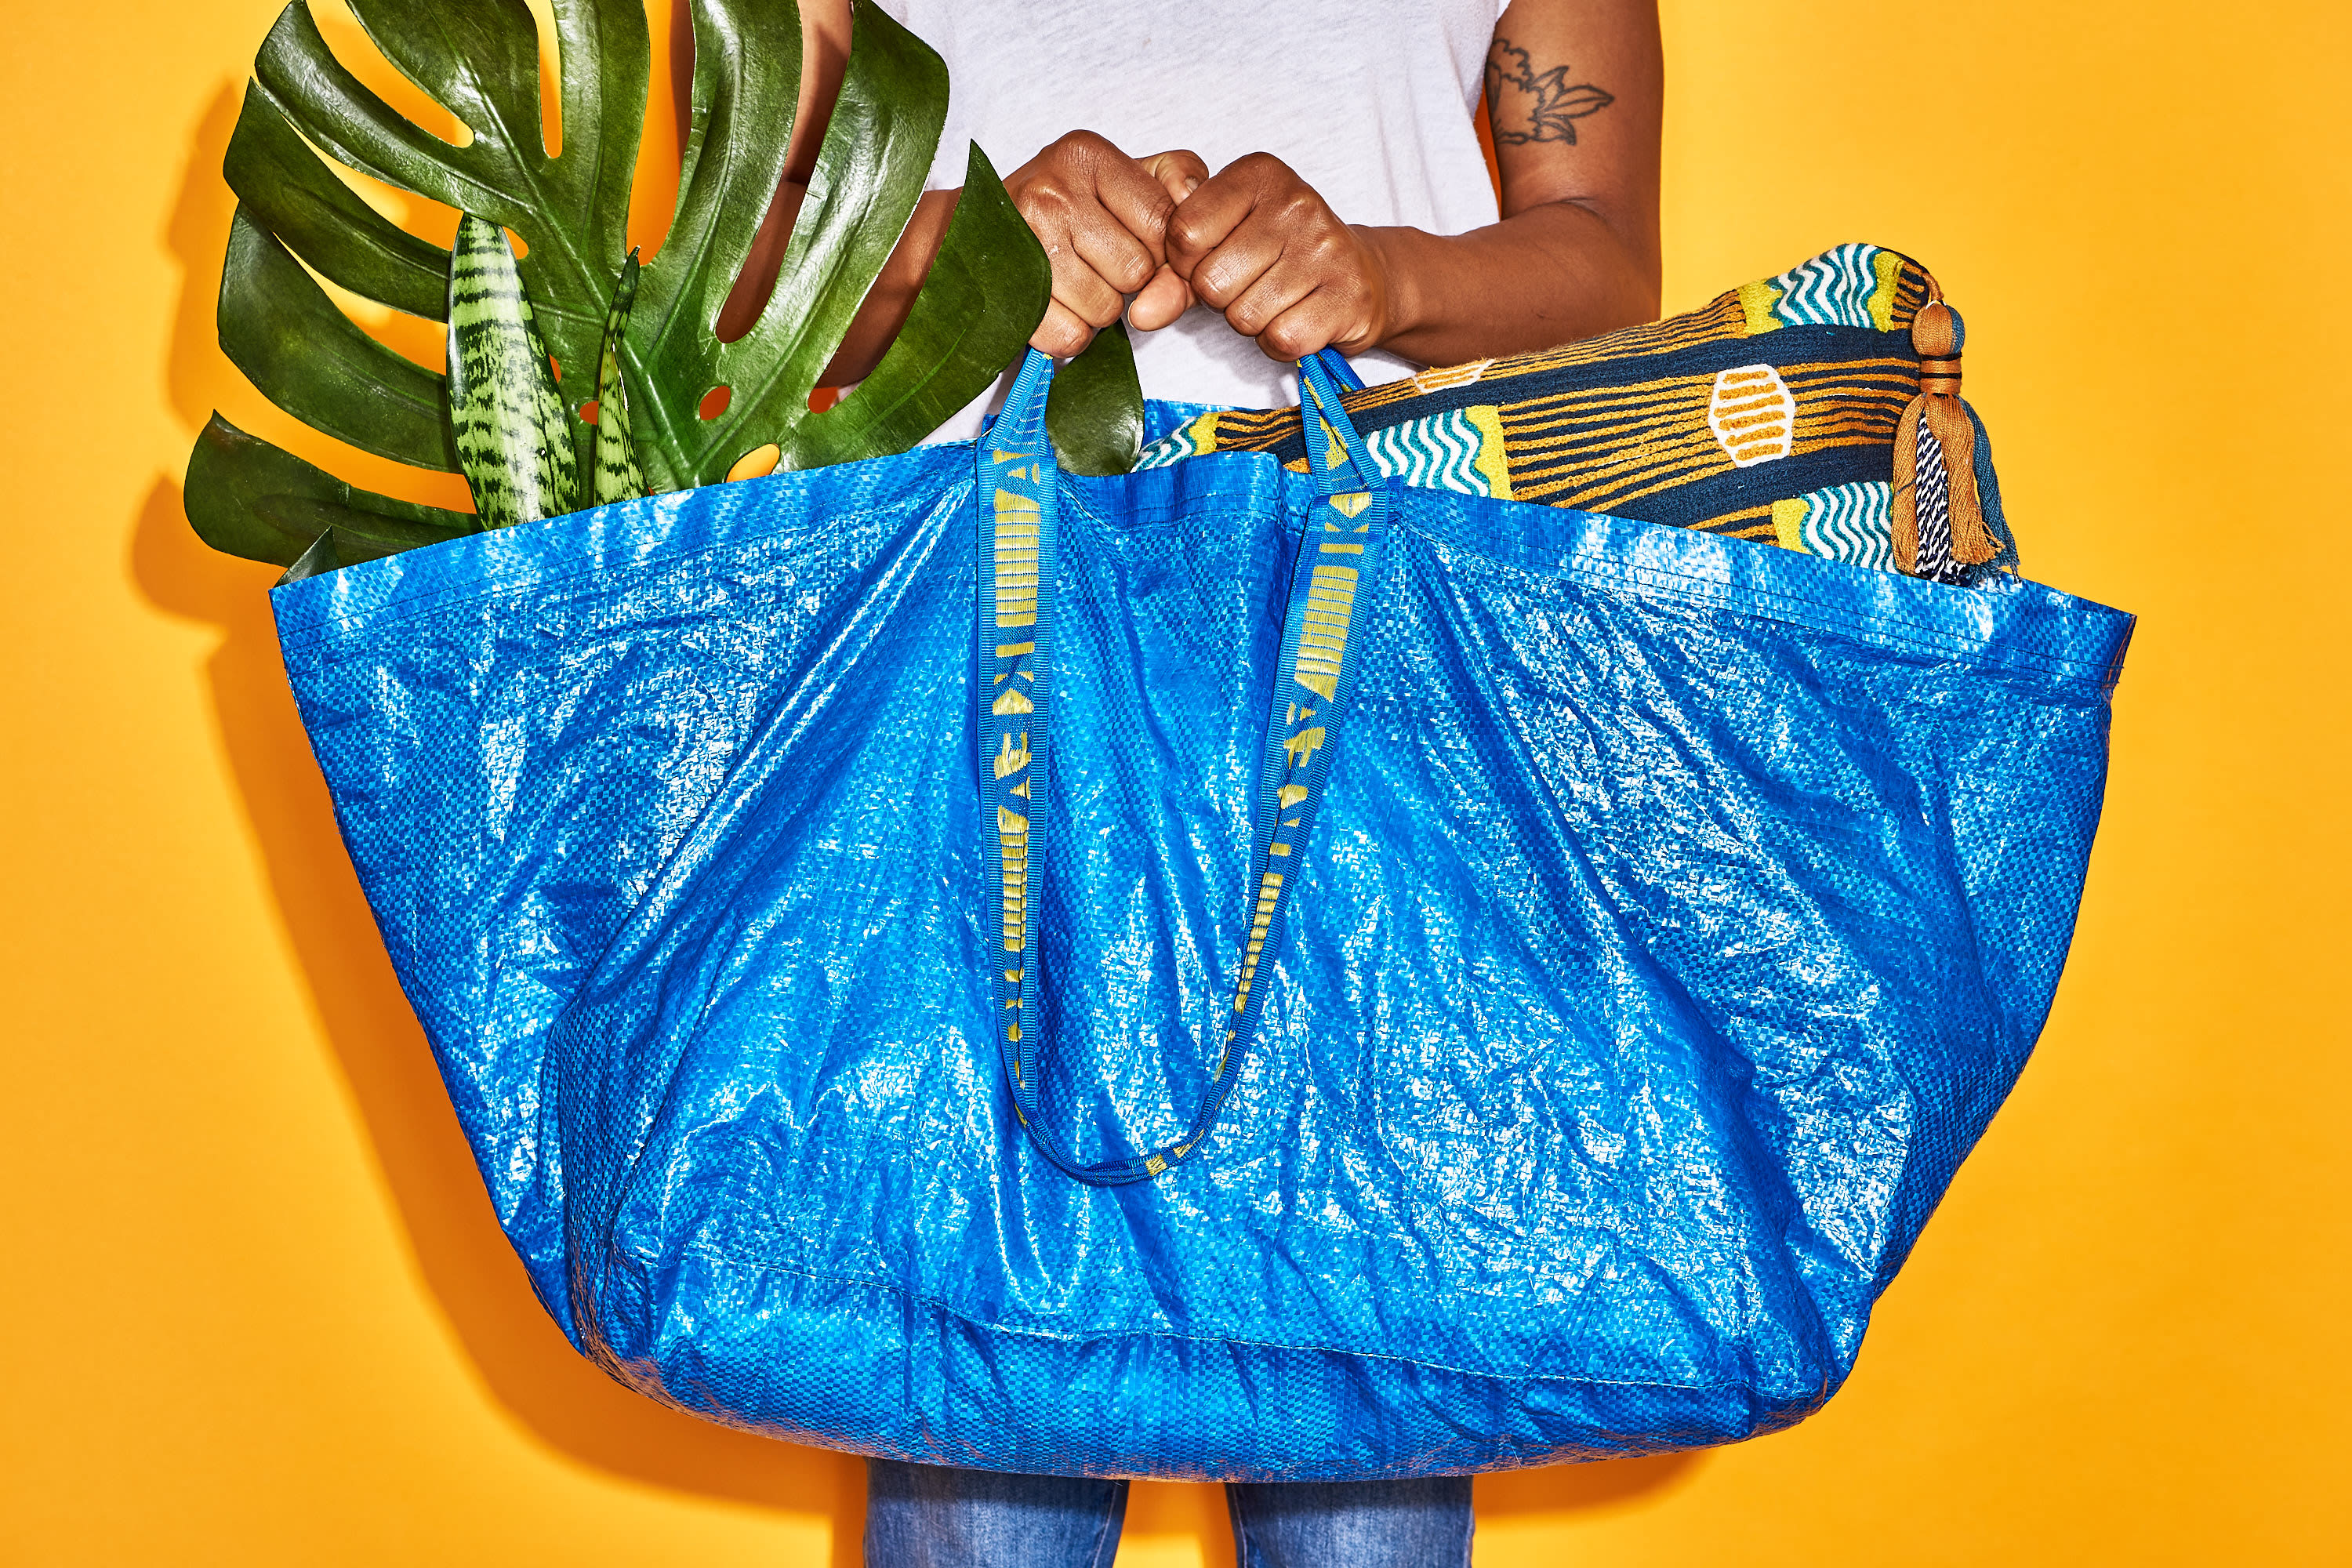 IKEA's Big Blue Bag marketing ploy just got better